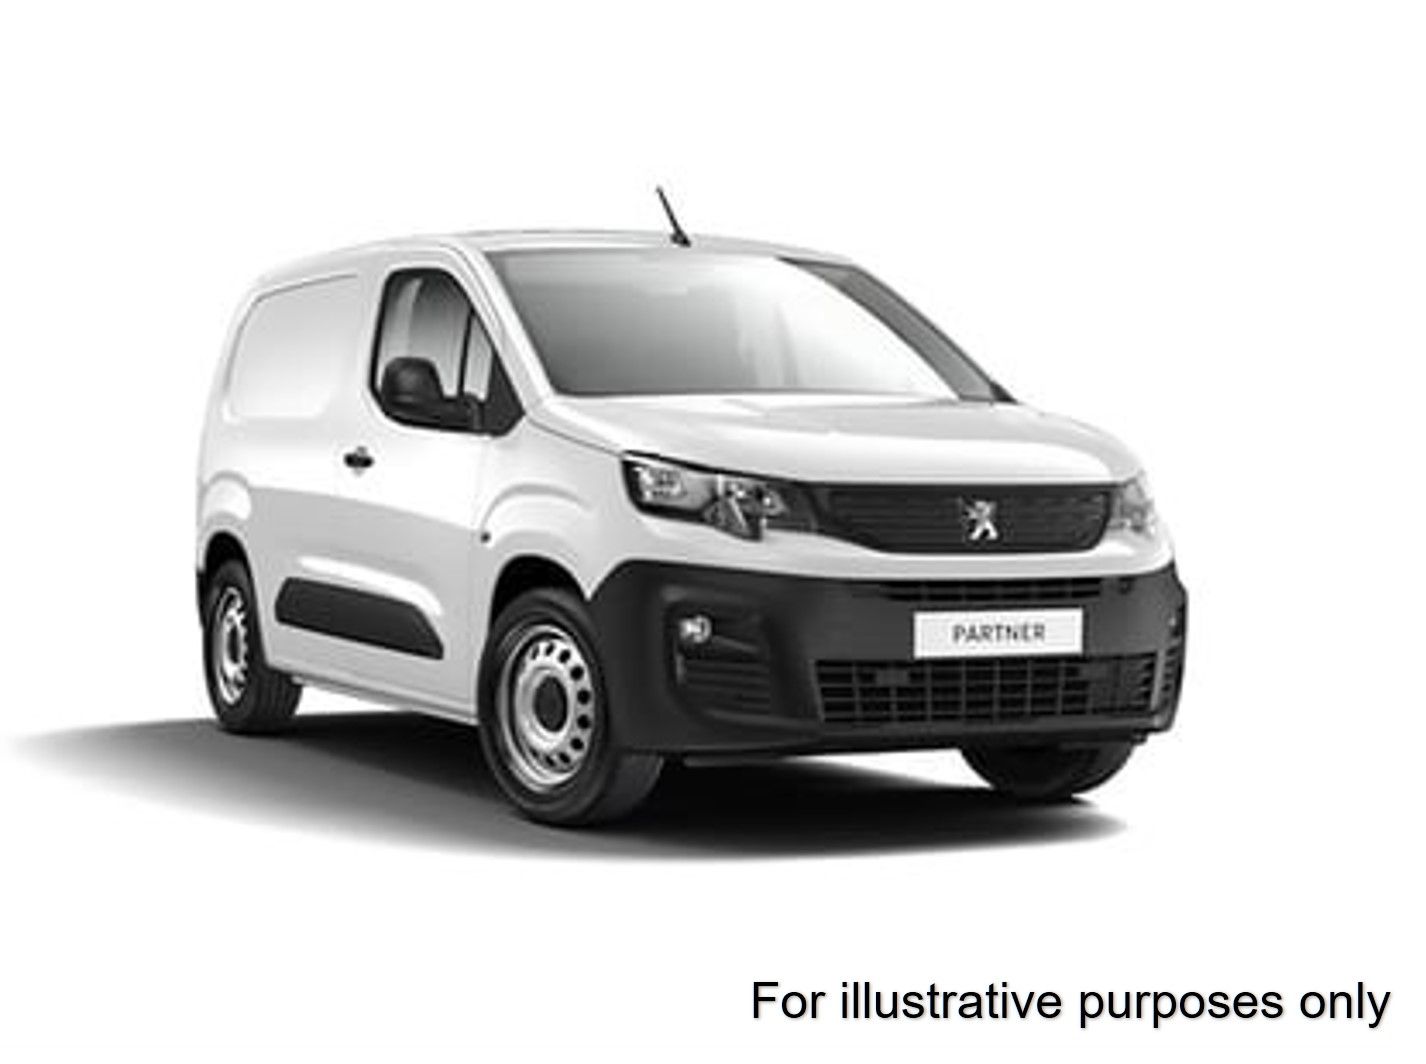 2019 Peugeot Partner 1000 1.5 Bluehdi 100 Professional Van (NY19AUW) Thumbnail 1